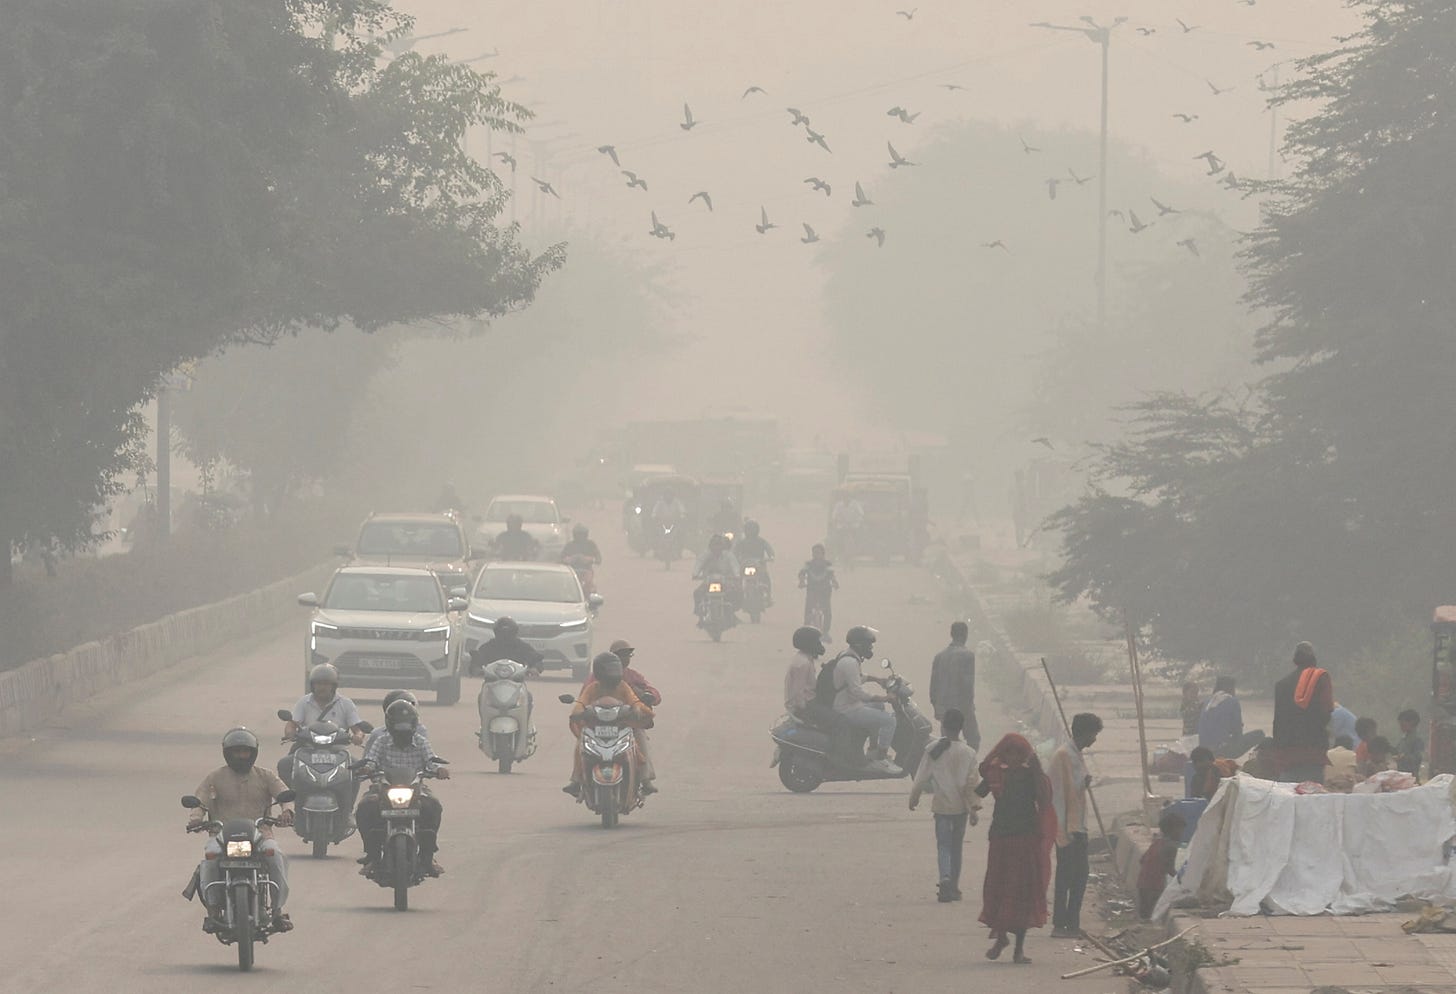 New Delhi plans to make rain to tackle 'hazardous' smog | Reuters